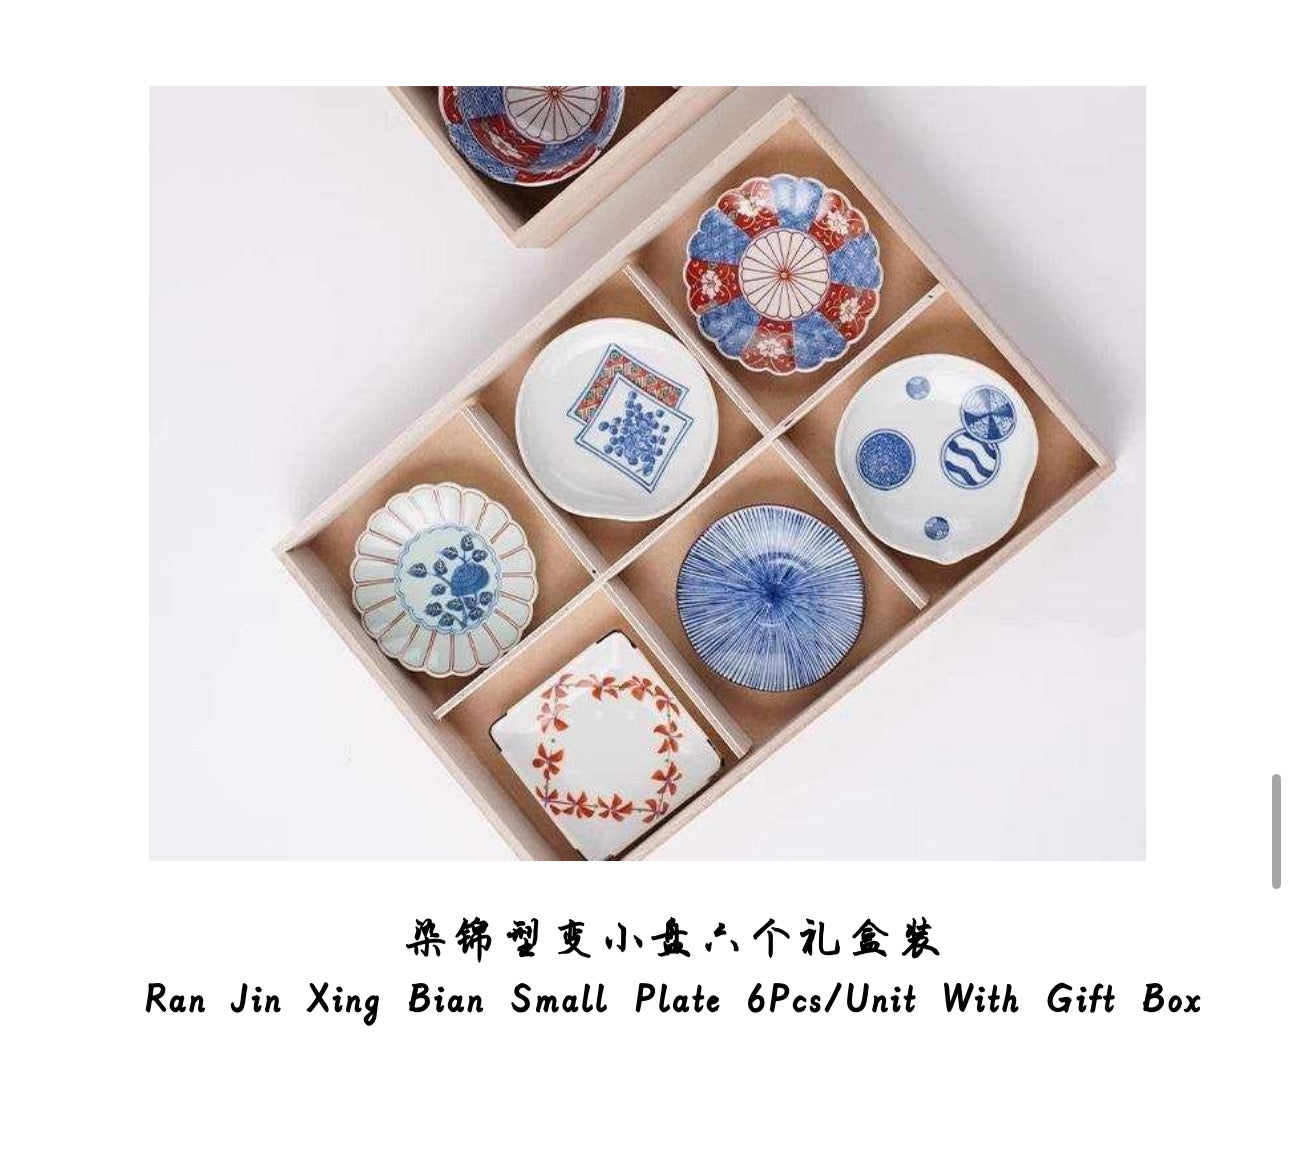 Japan Ran Jin Xing Bian Small Plate 6Pcs/Unit With Gift Box